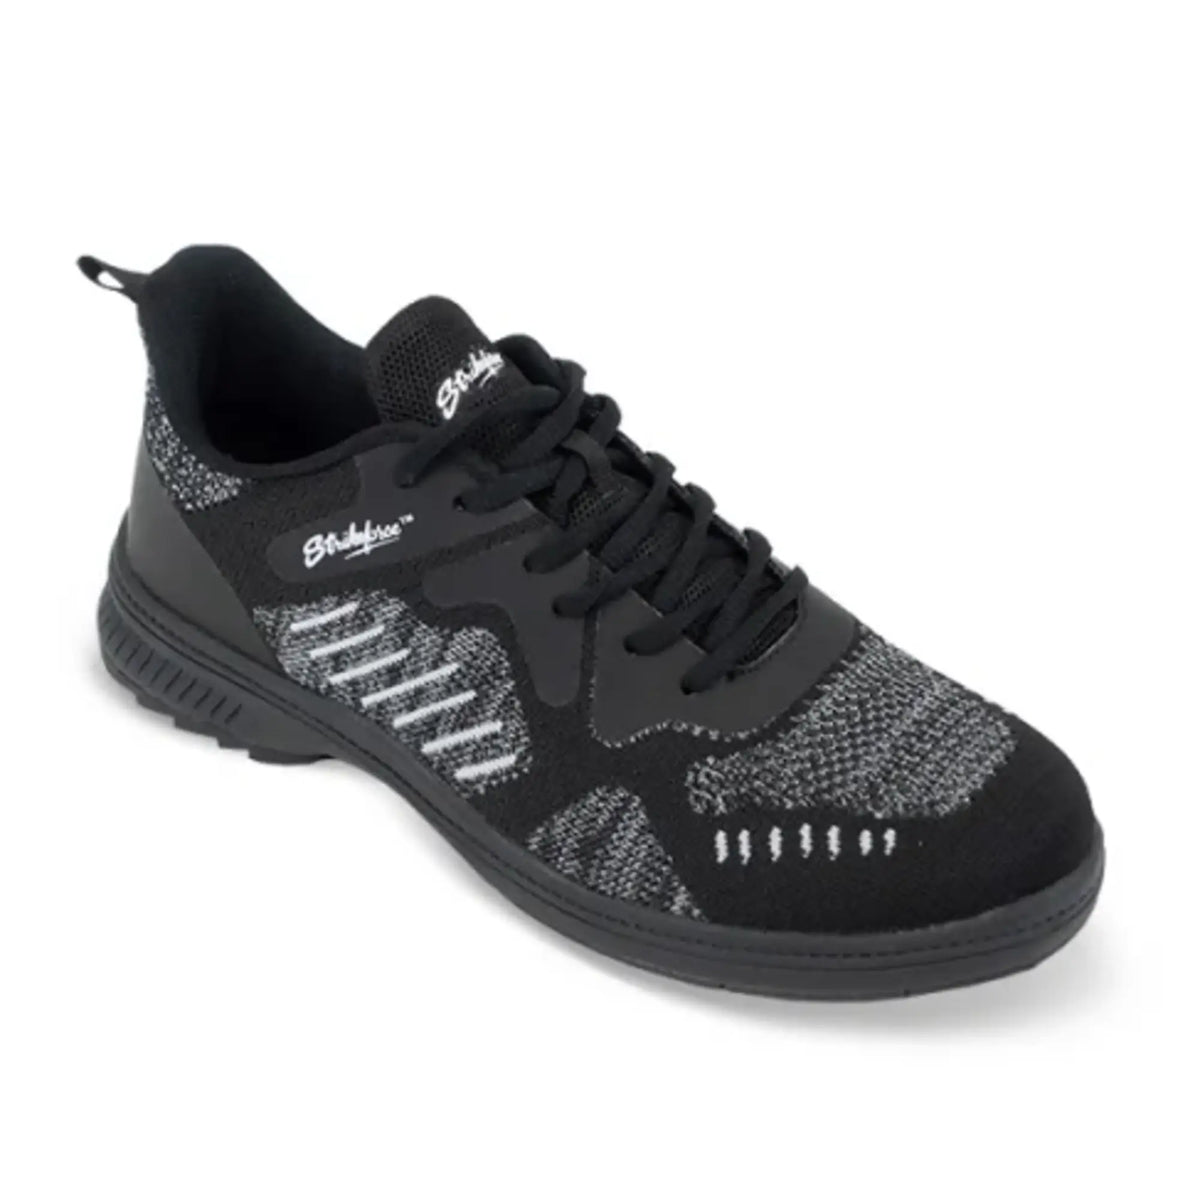 Admiral Black/Grey ( Rh ) Shoes